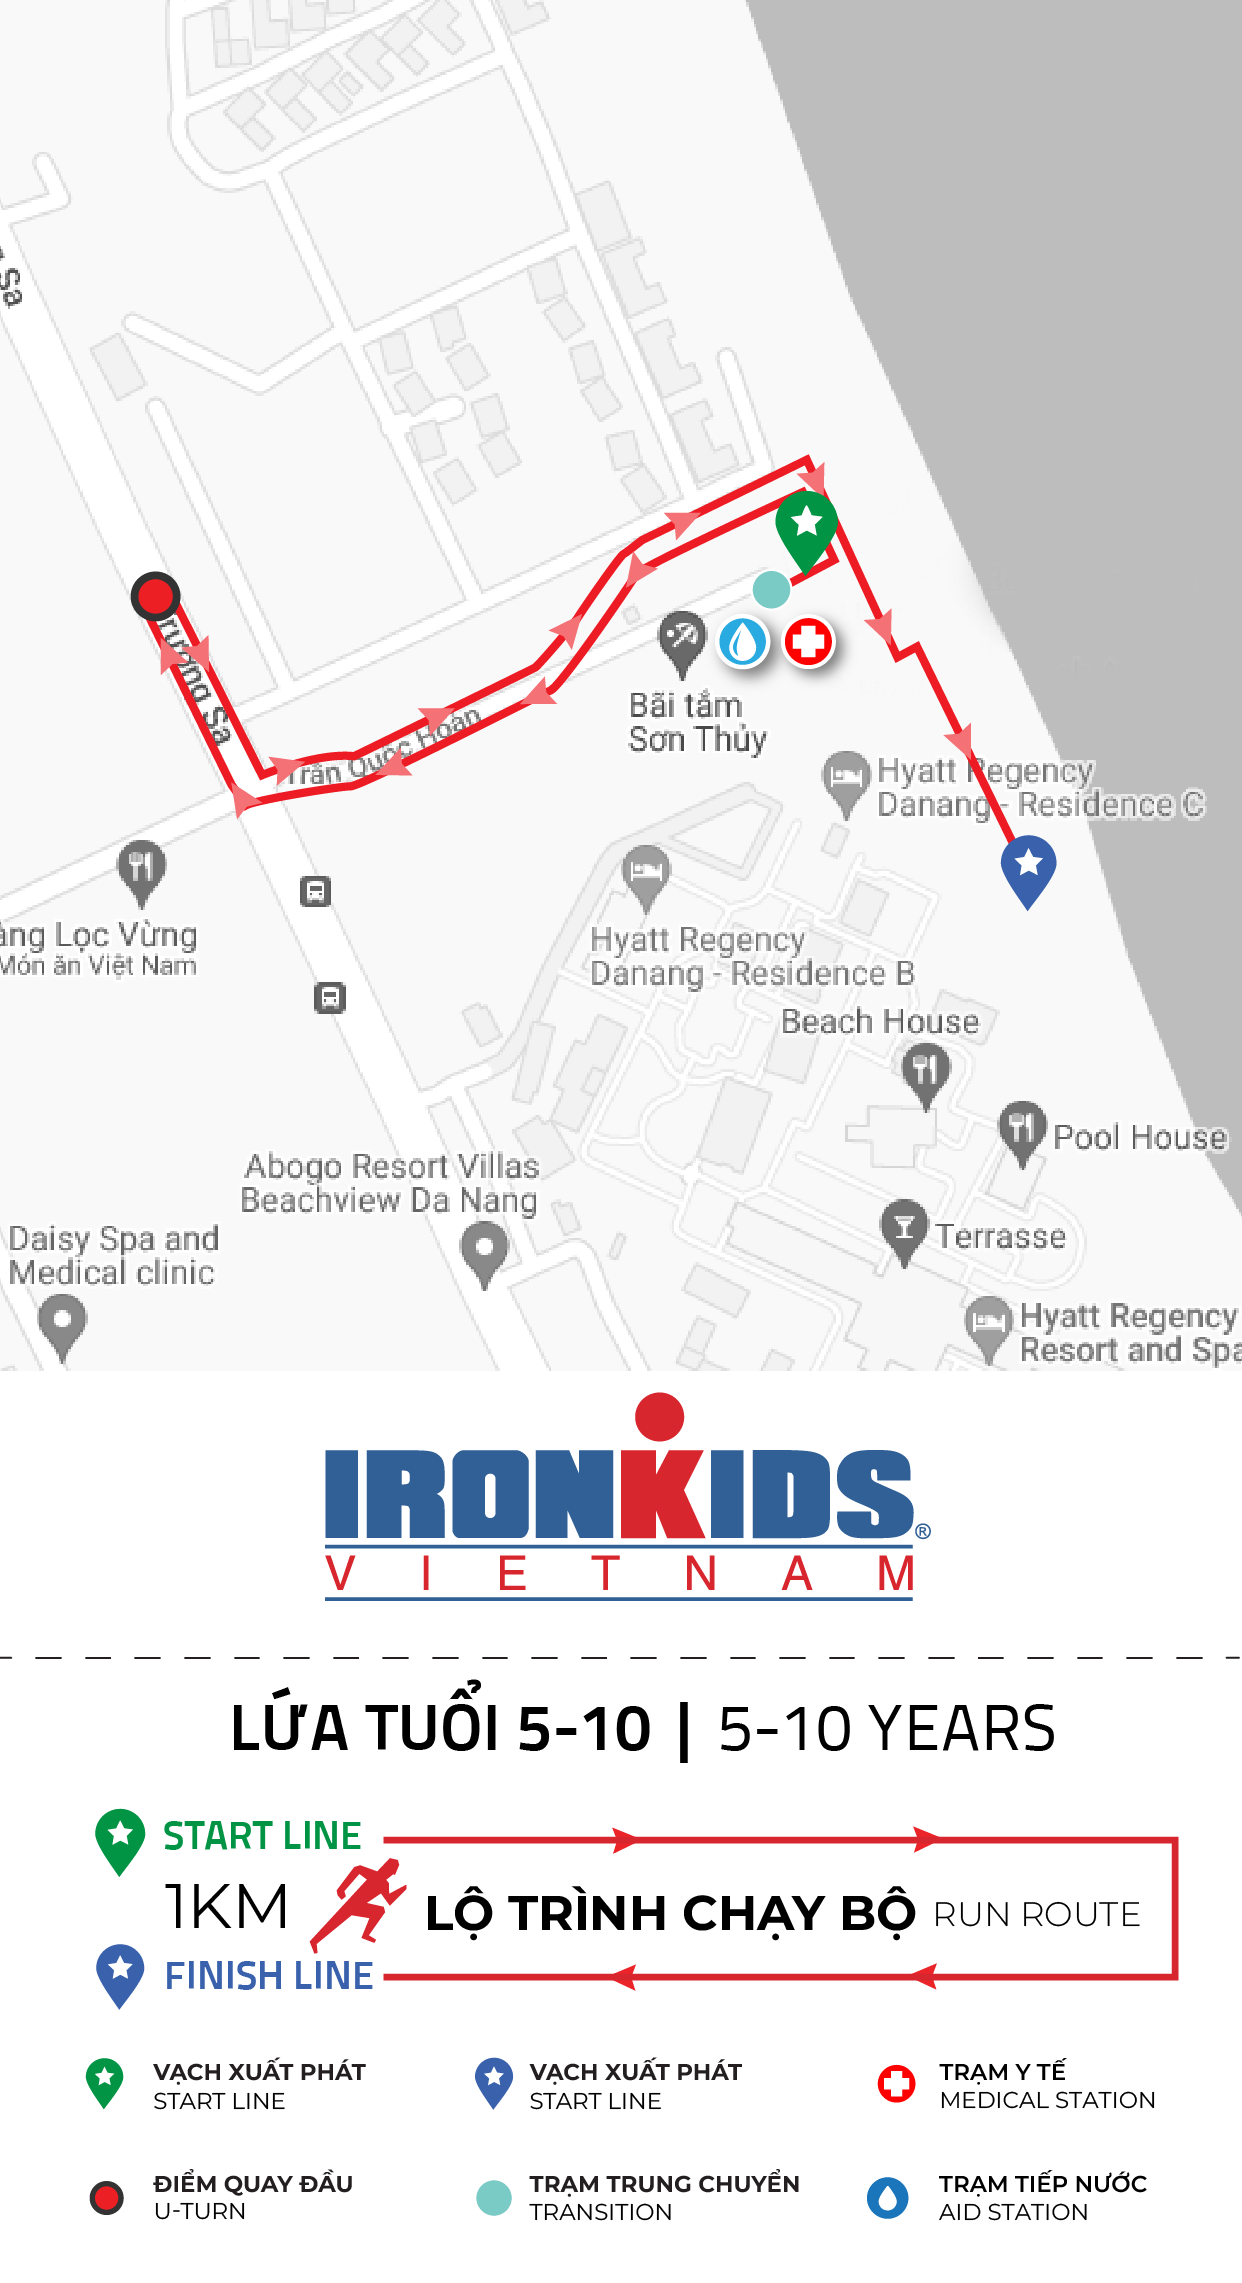 IRONKIDS Viet Nam 2023 - 5-10 years - Run Course